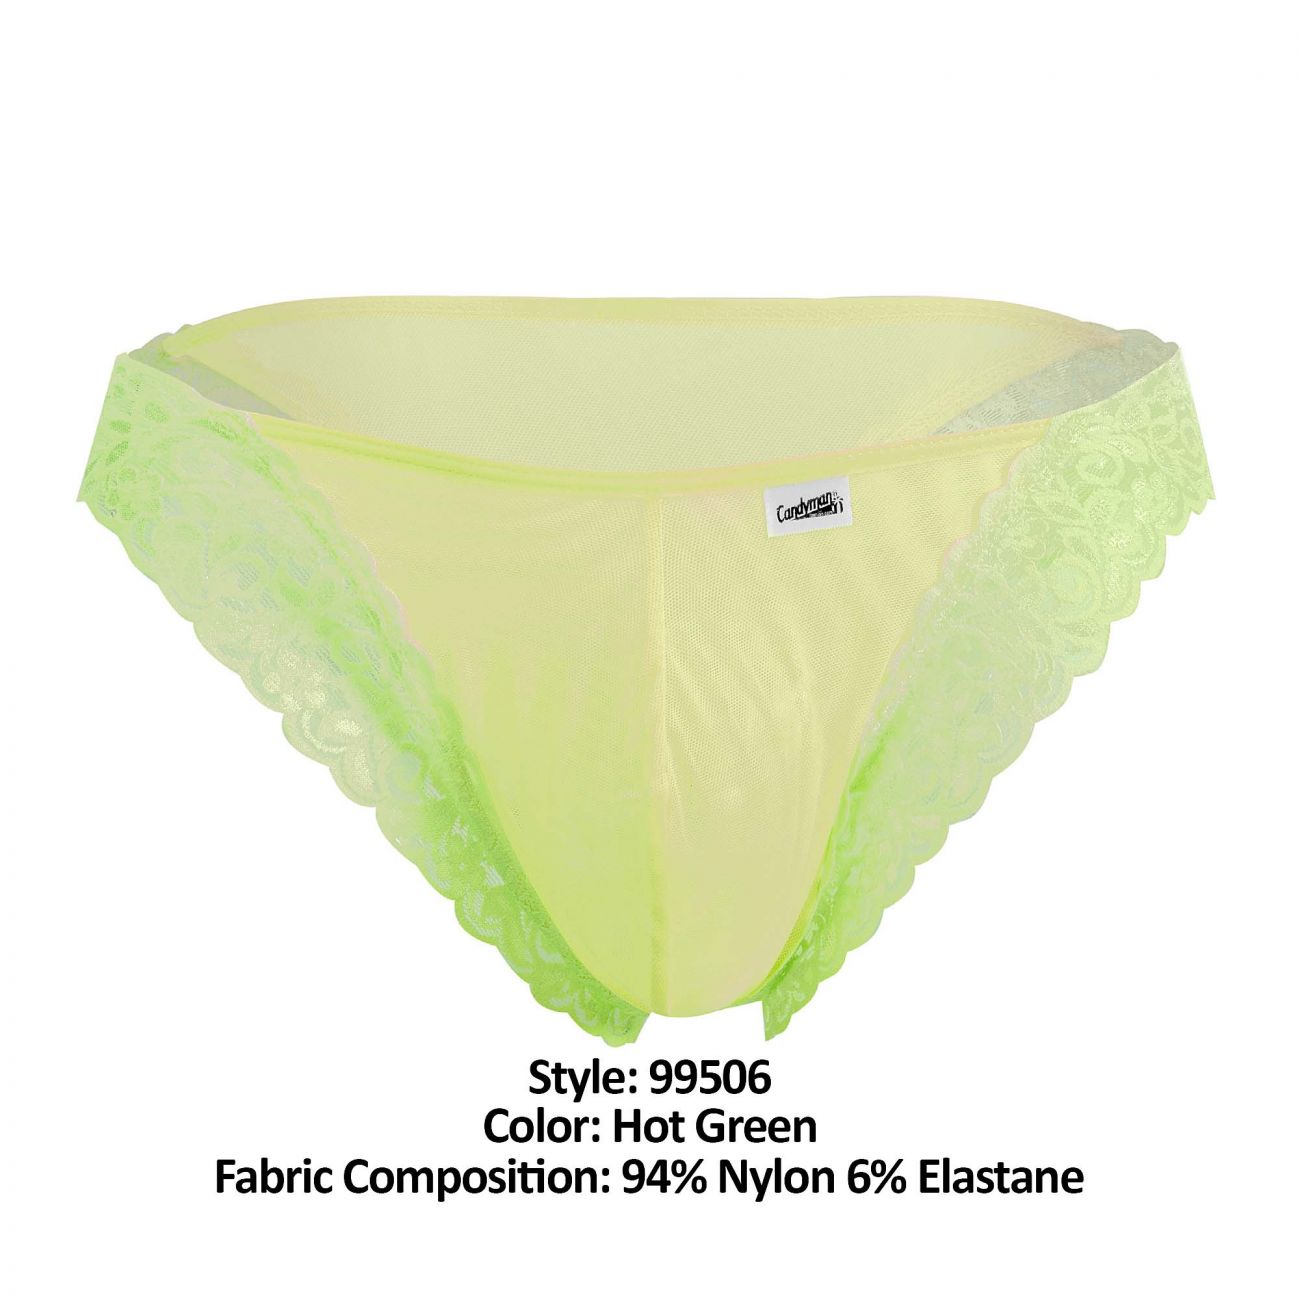 JCSTK - CandyMan 99506 Mesh-Lace Thongs Hot Green